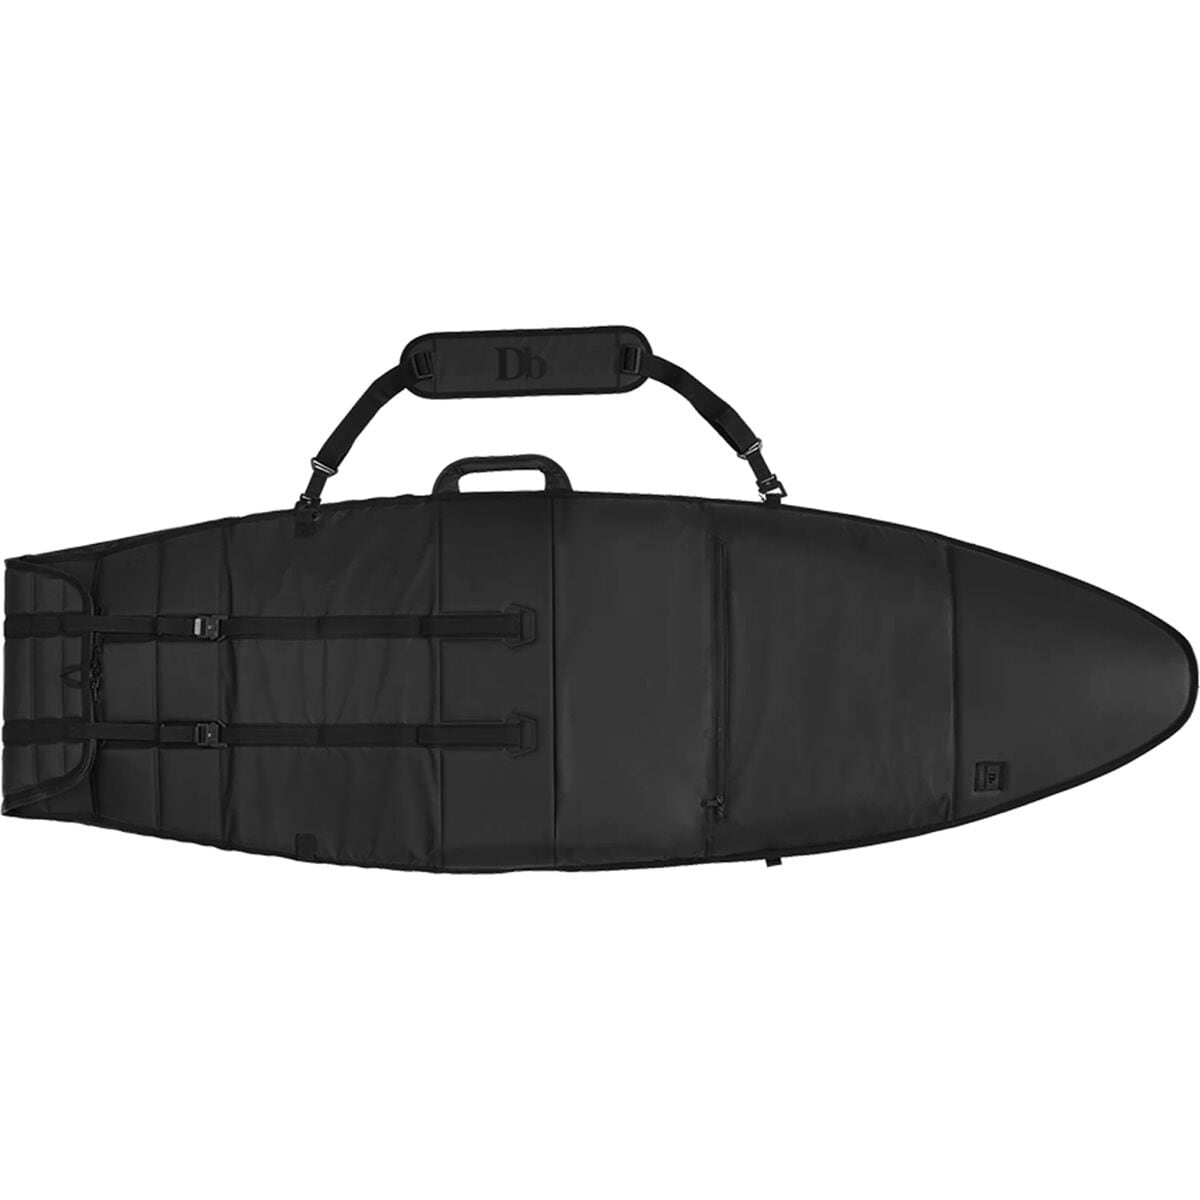 Single Board Short Surf Bag